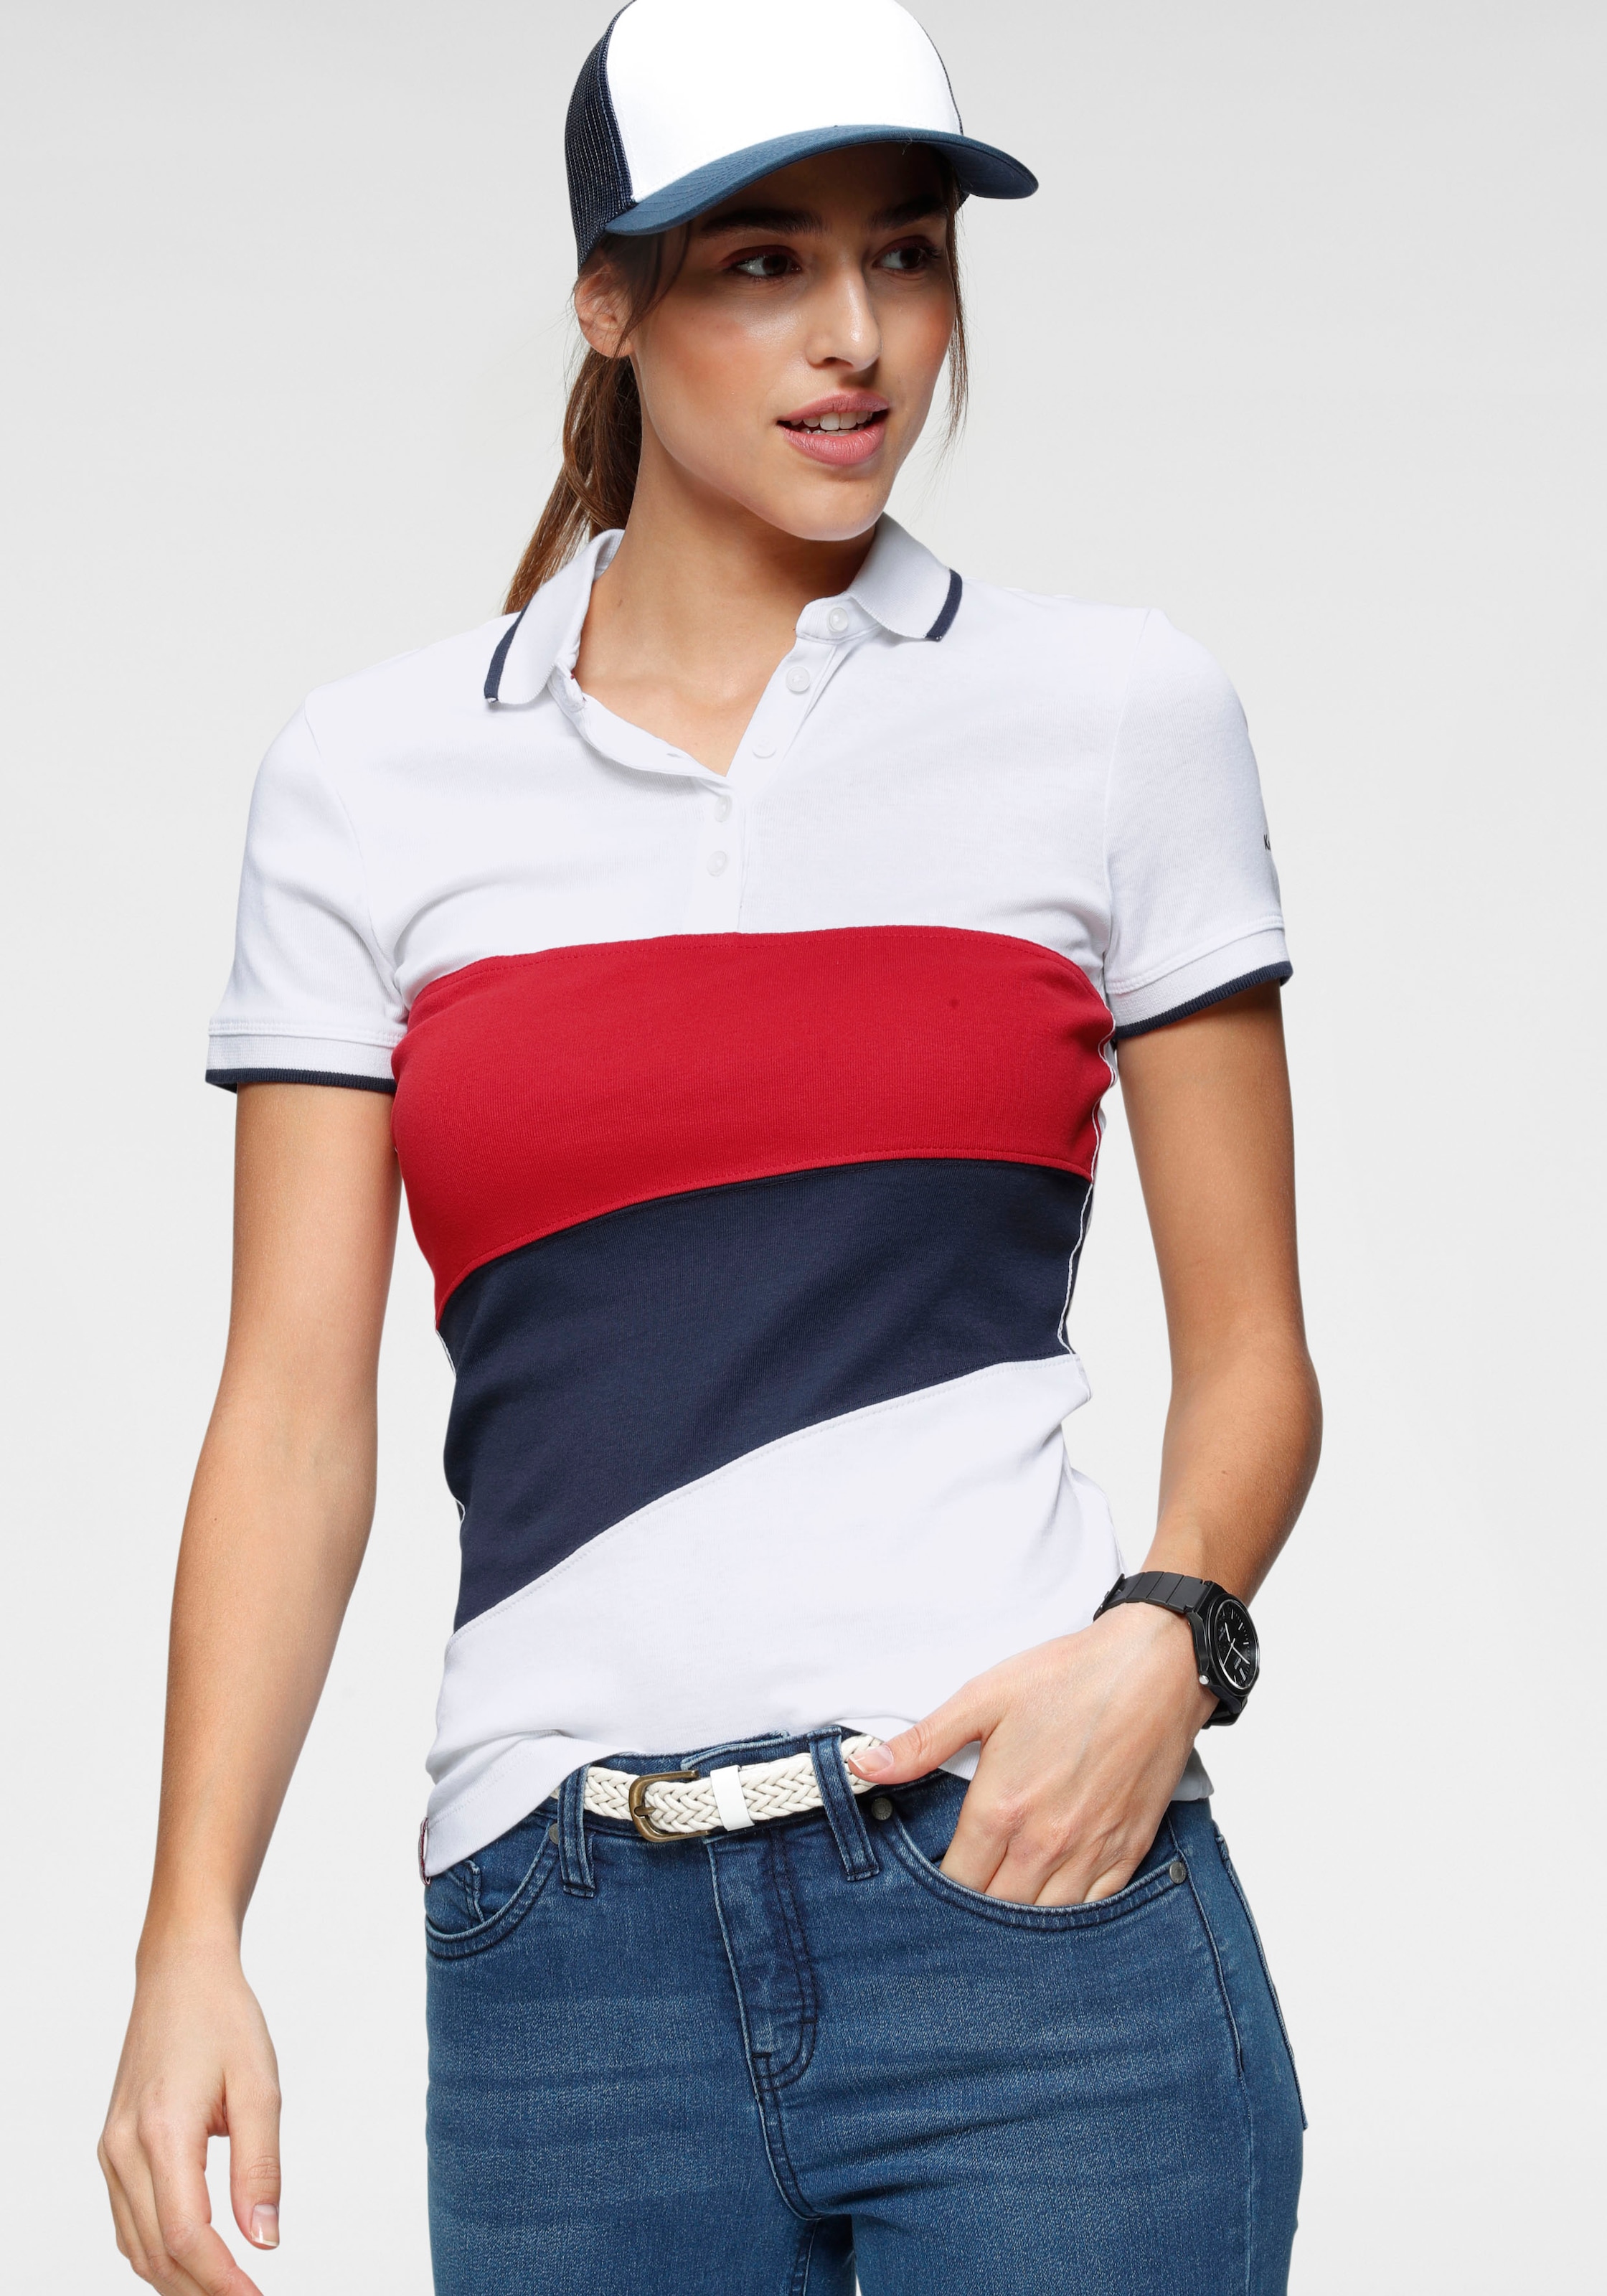 KangaROOS mit Colorblocking OTTO kaufen Poloshirt, bei